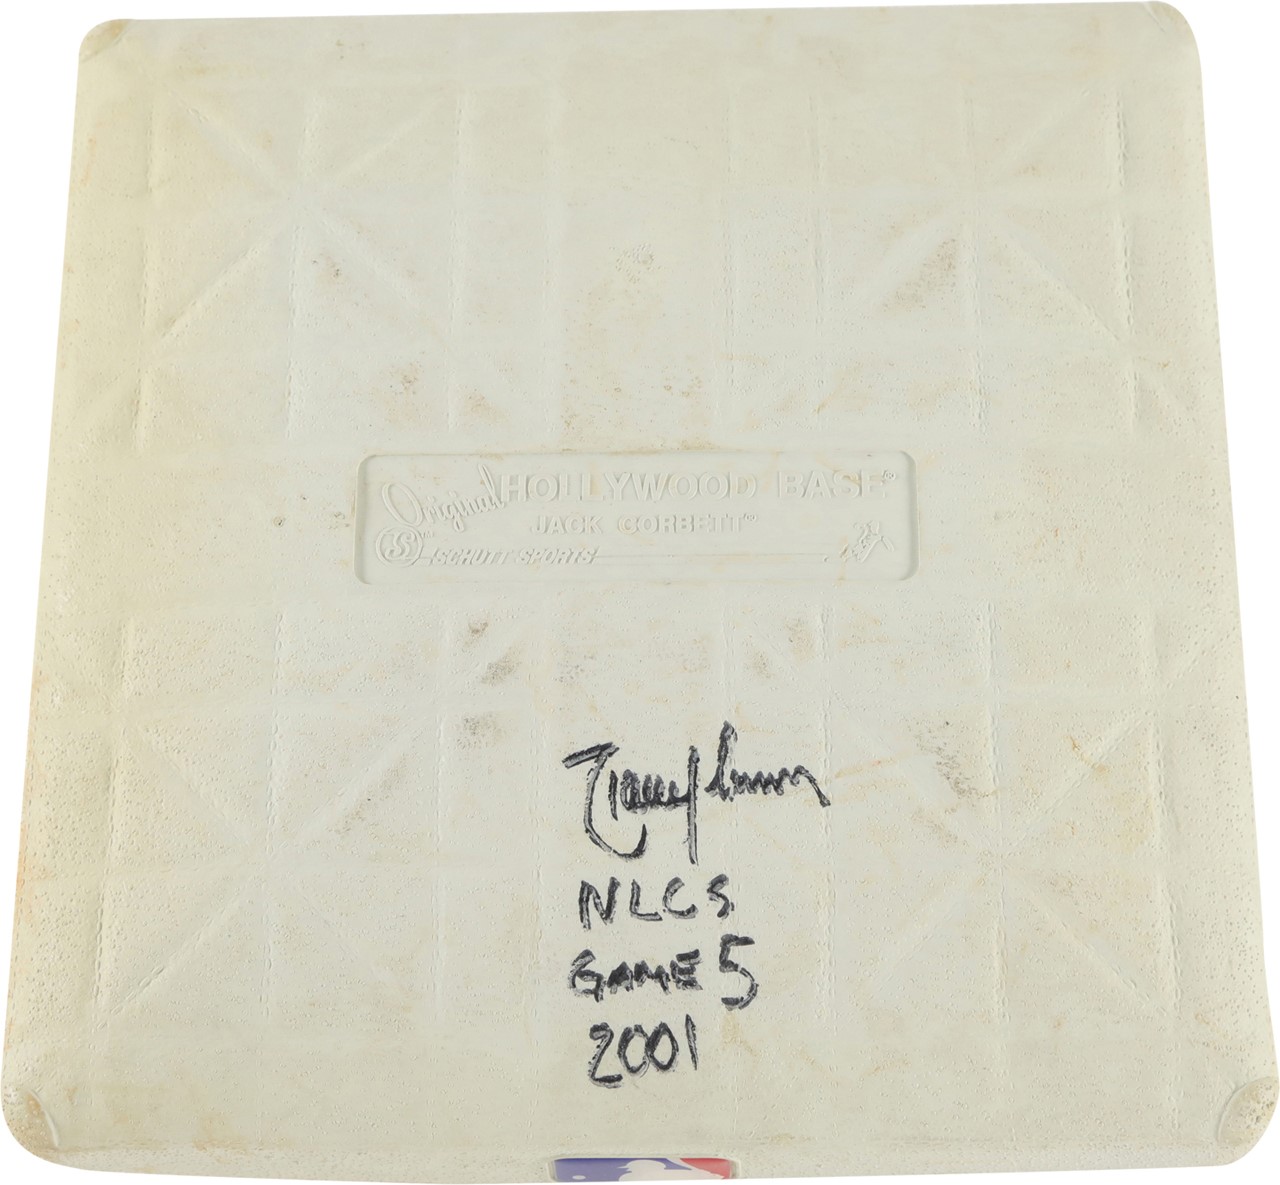 - 2001 NLCS Game 5 Randy Johnson Signed Game Used Base (MLB & Steiner)